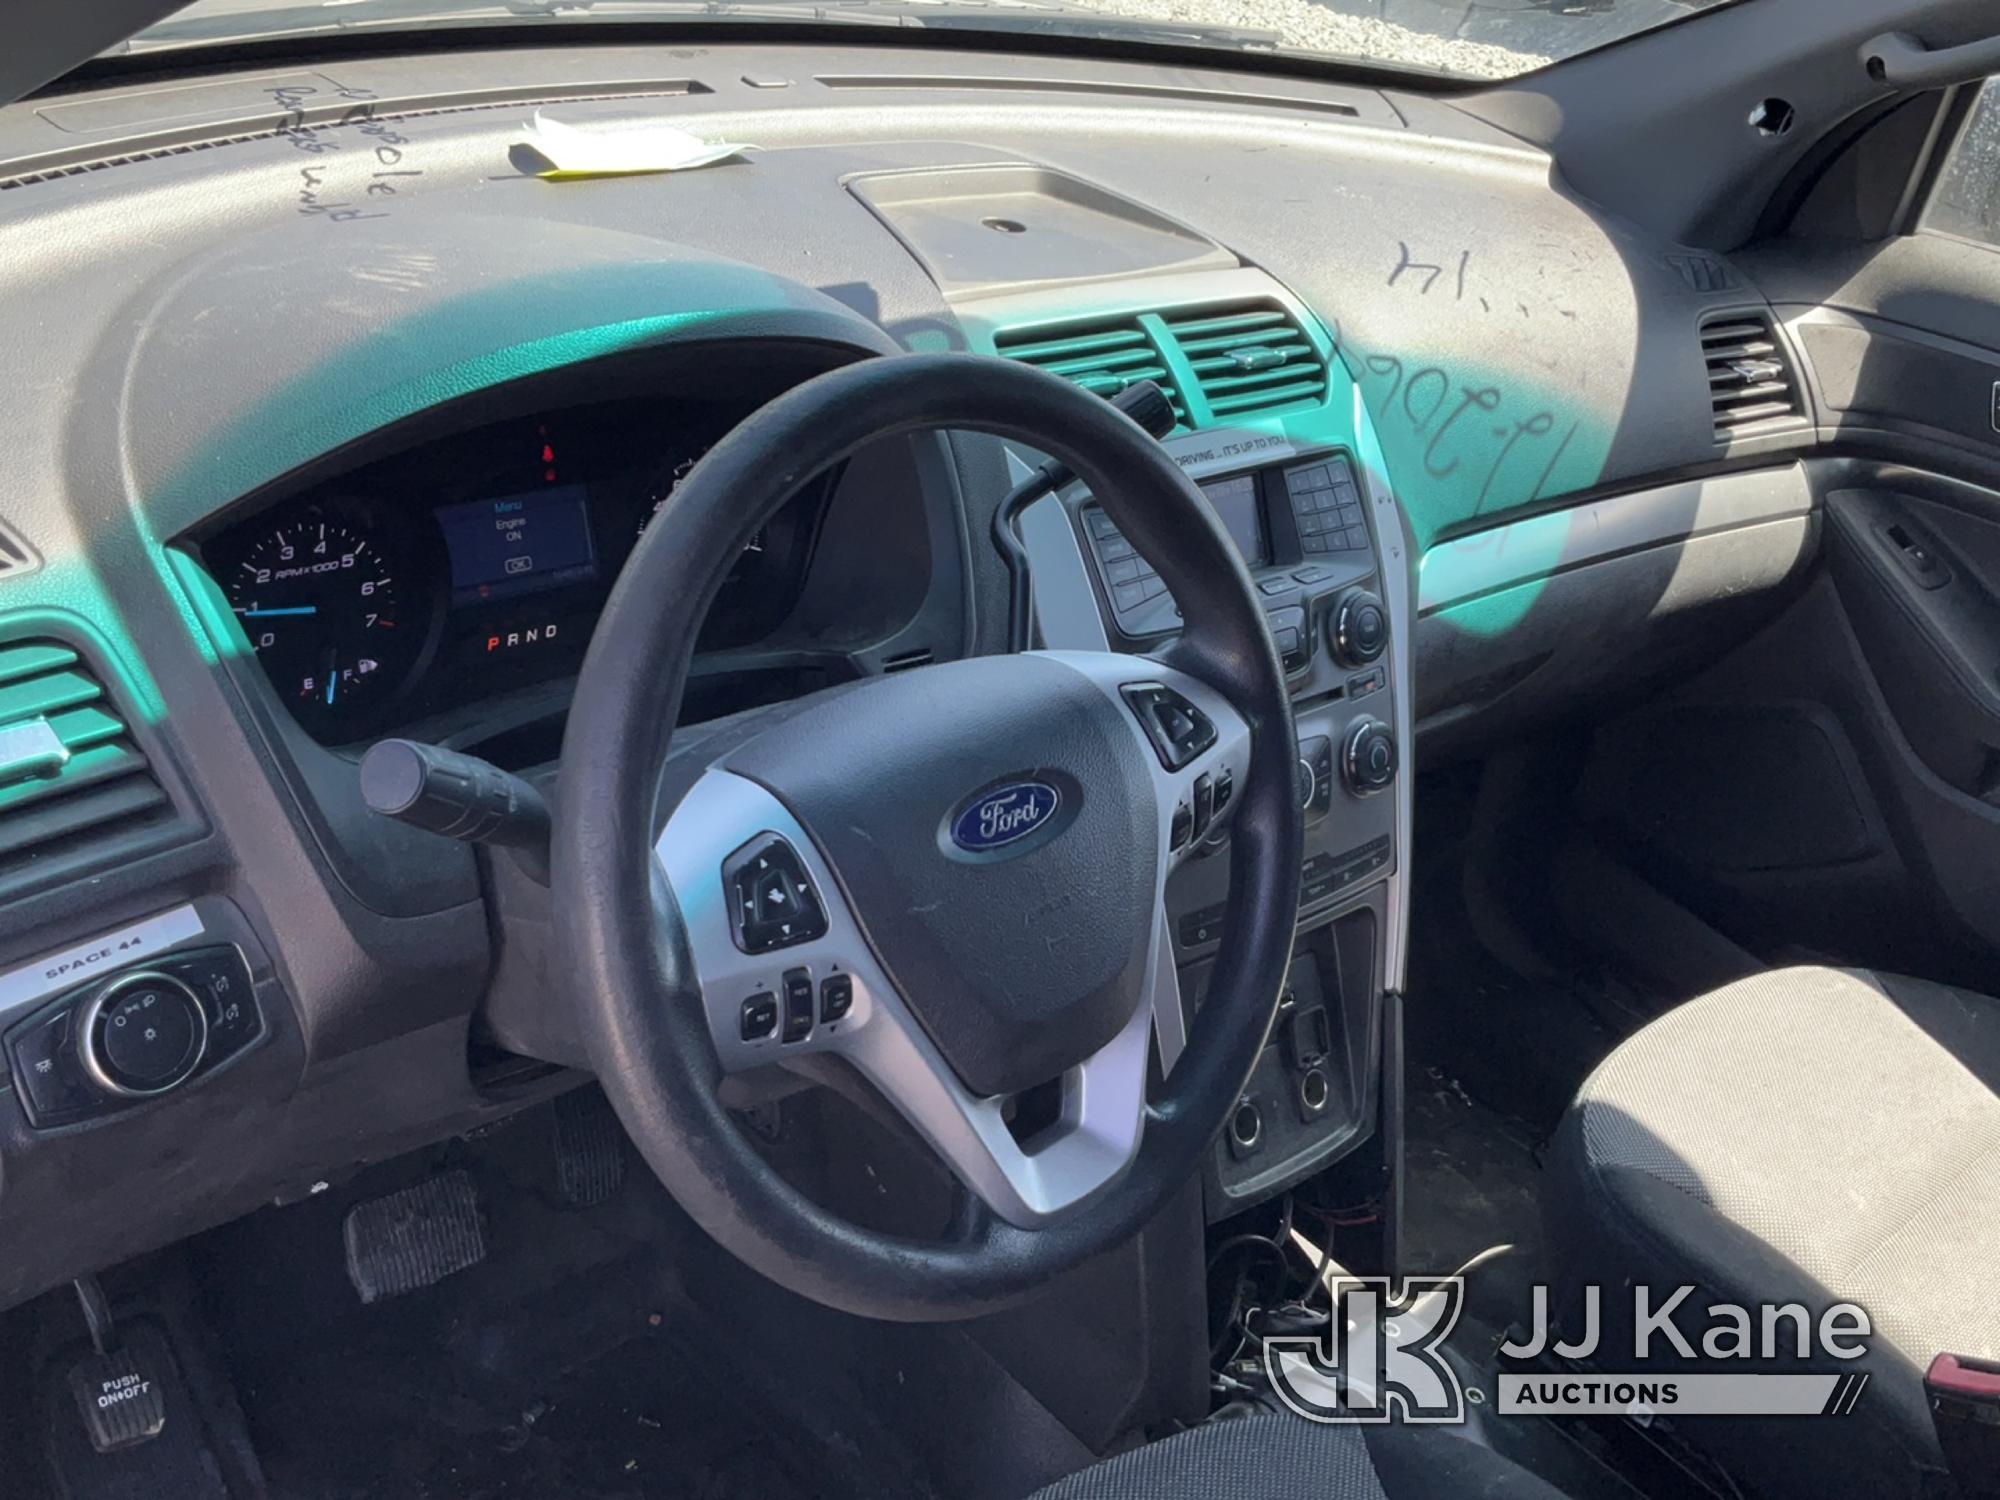 (Las Vegas, NV) 2014 Ford Explorer AWD Police Interceptor No Console, Rear Seats Unbolted Runs & Mov